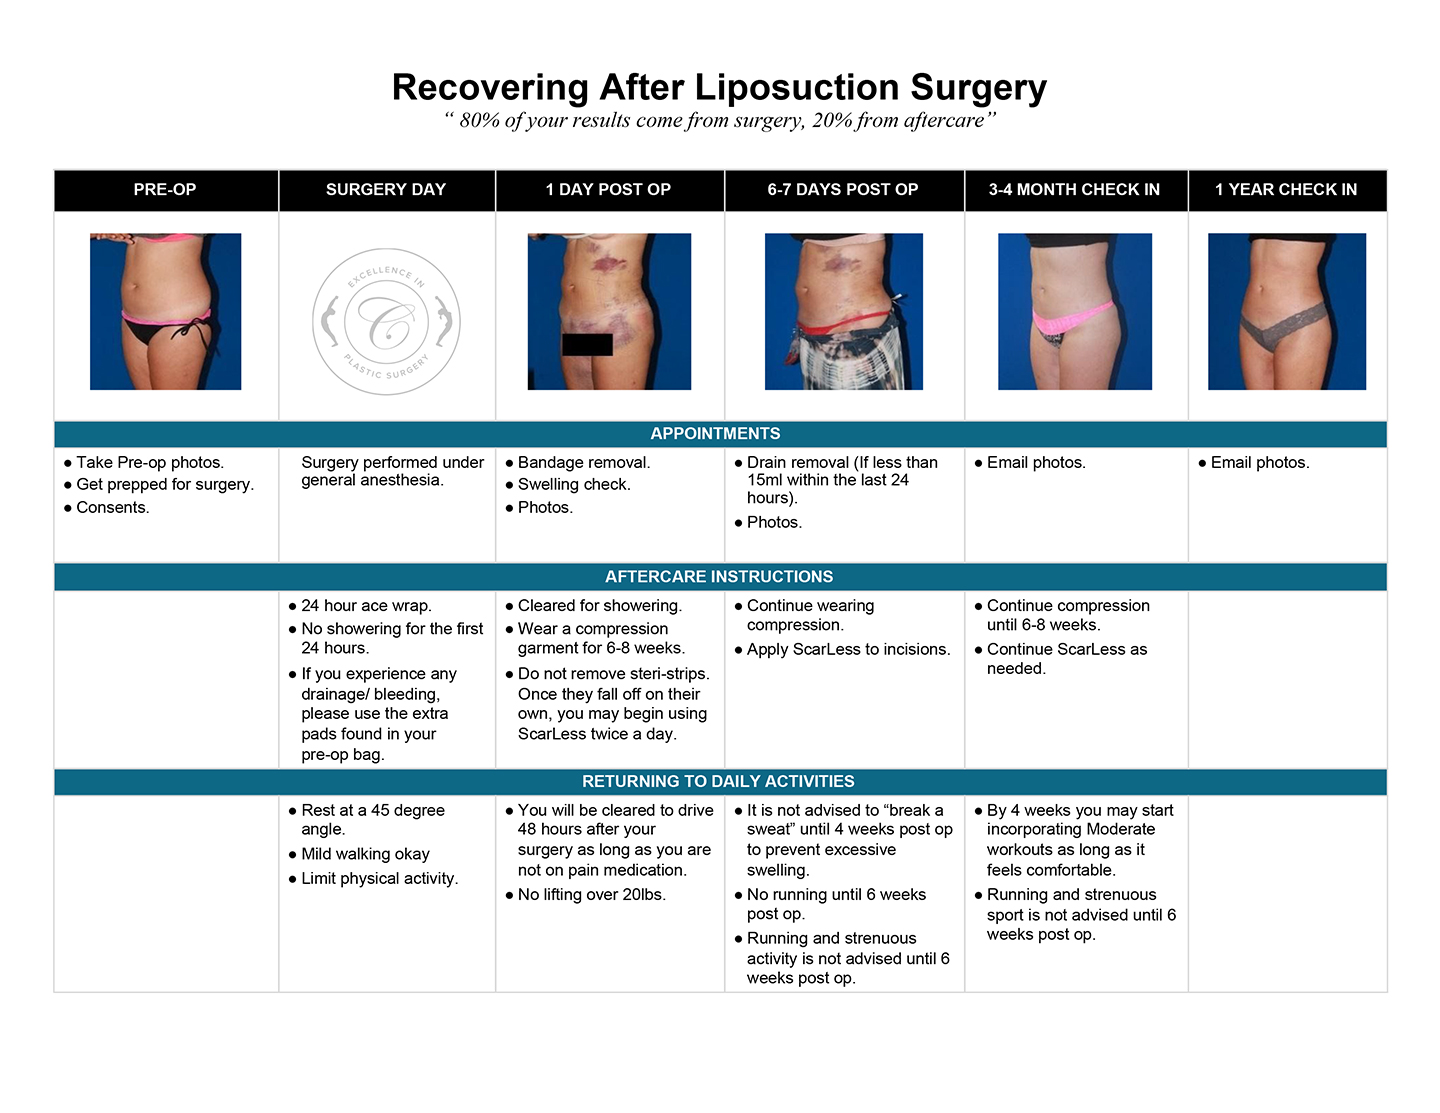 Liposuction-timeline